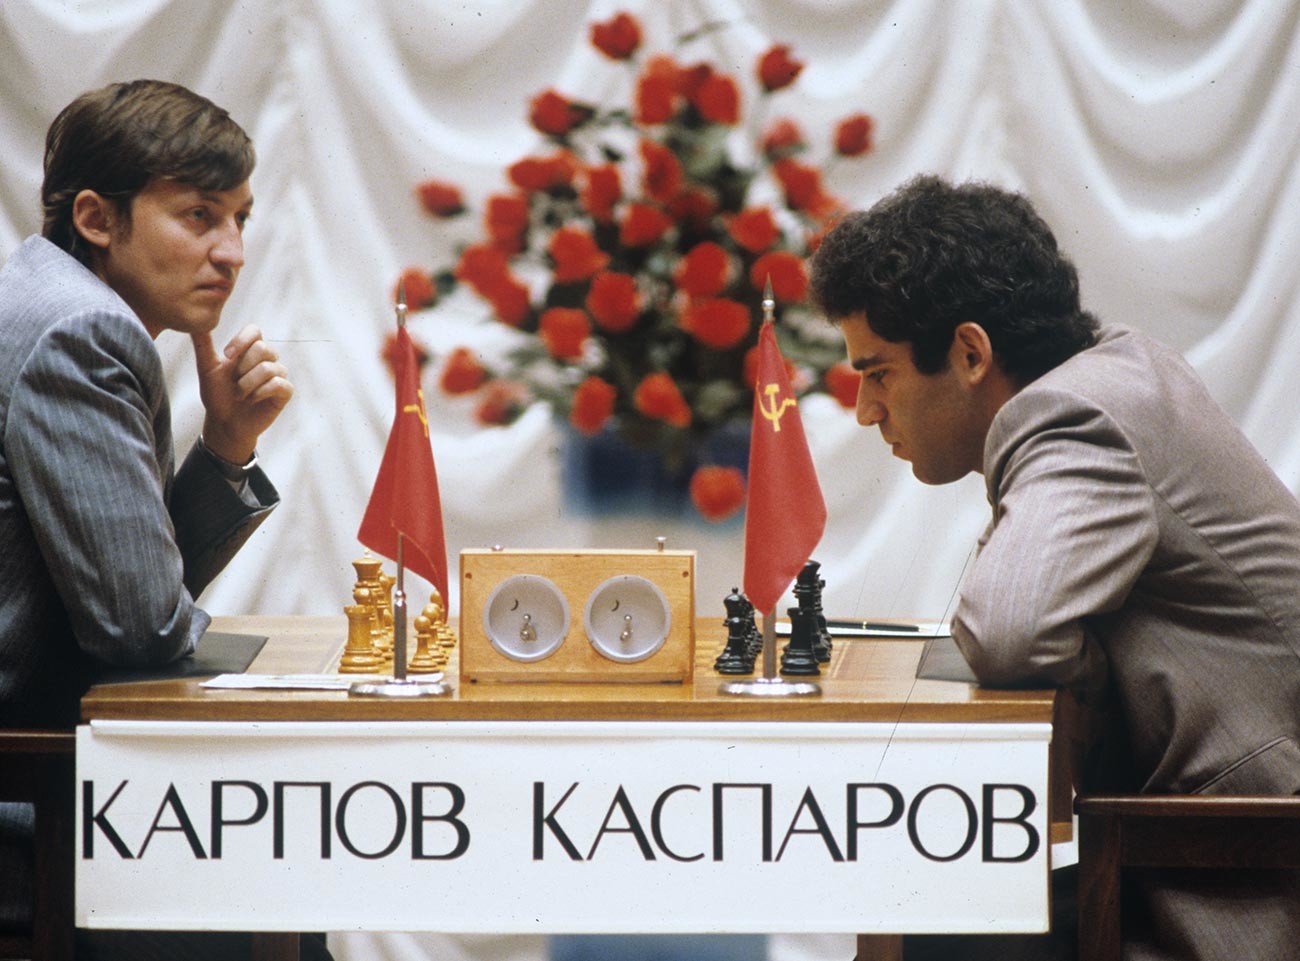 Karpov Kasparov photos